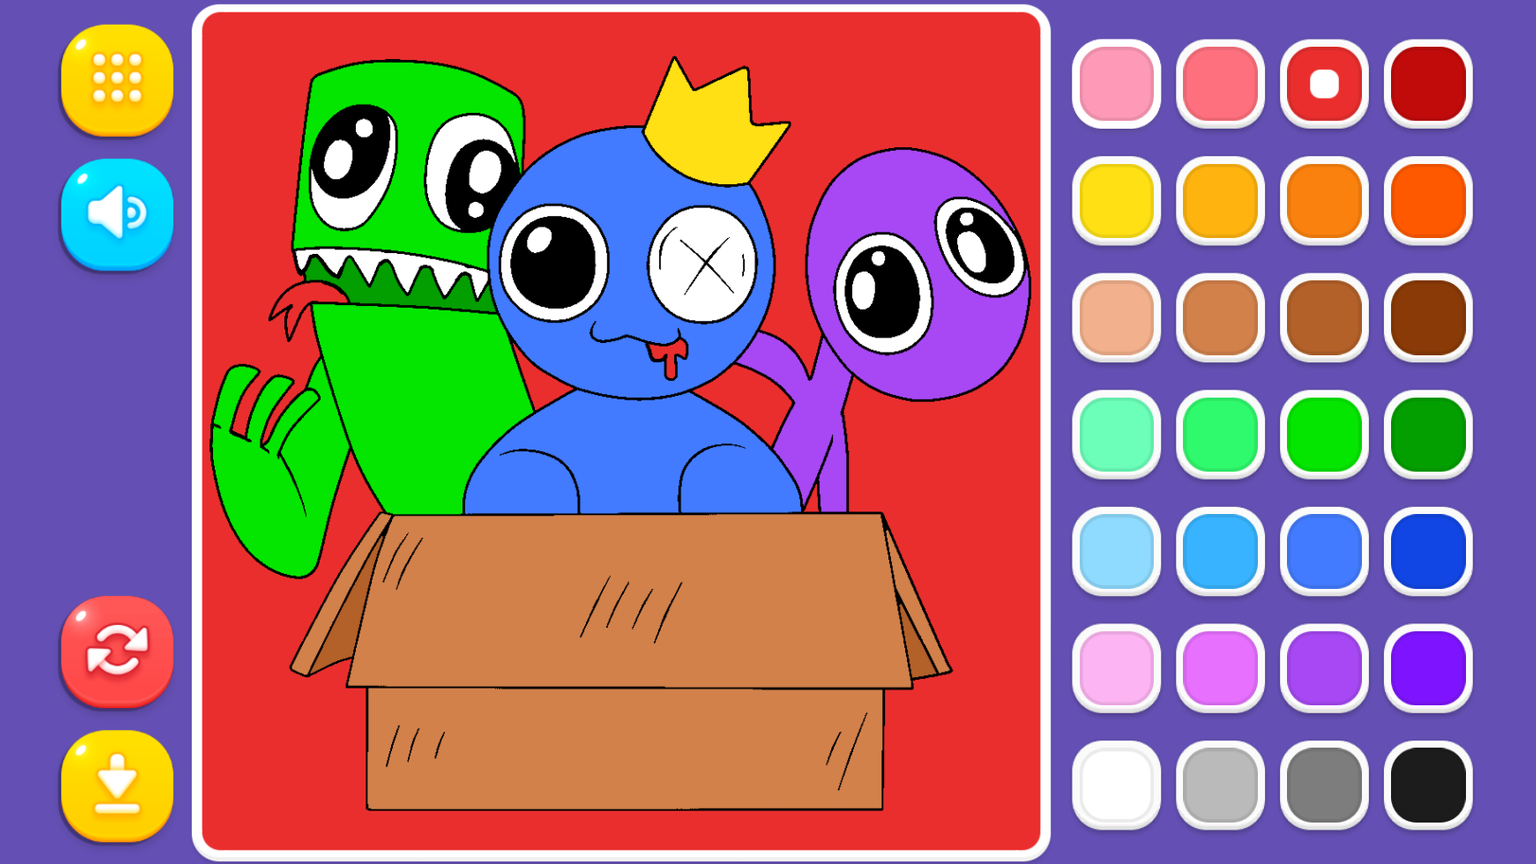 Rainbow Friends Roblox - Coloring — Jogue online gratuitamente em